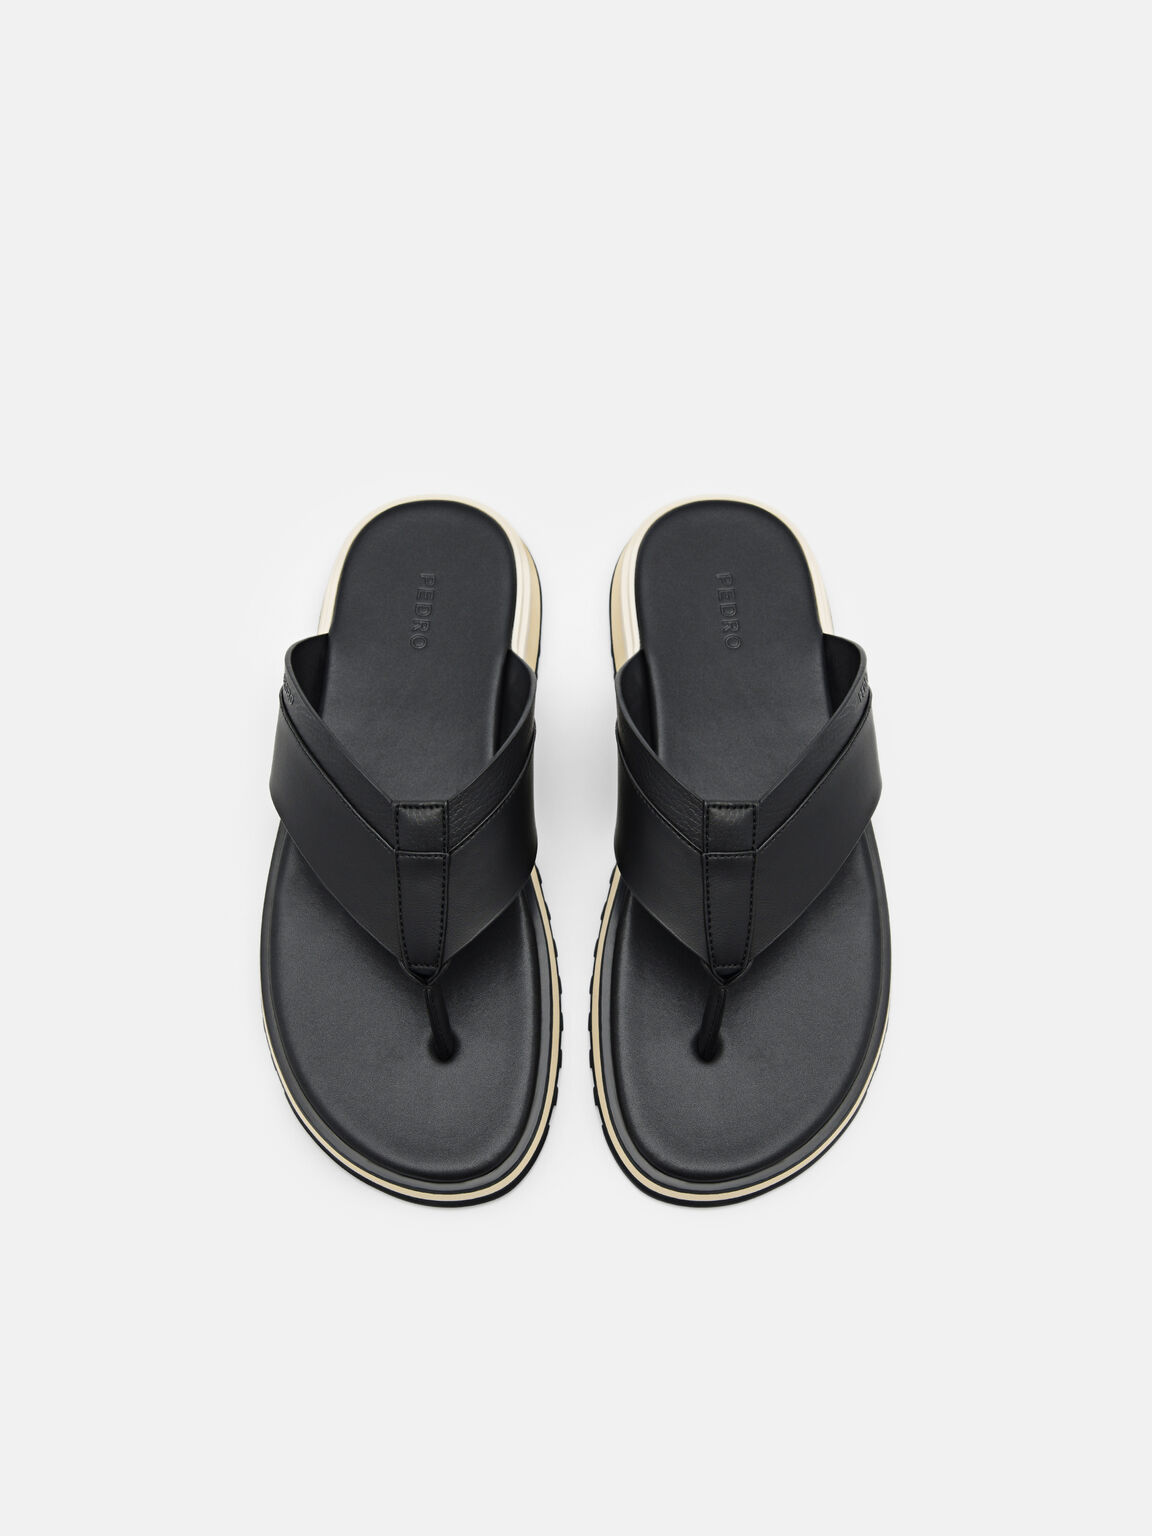 Microfiber Thong Sandals, Black